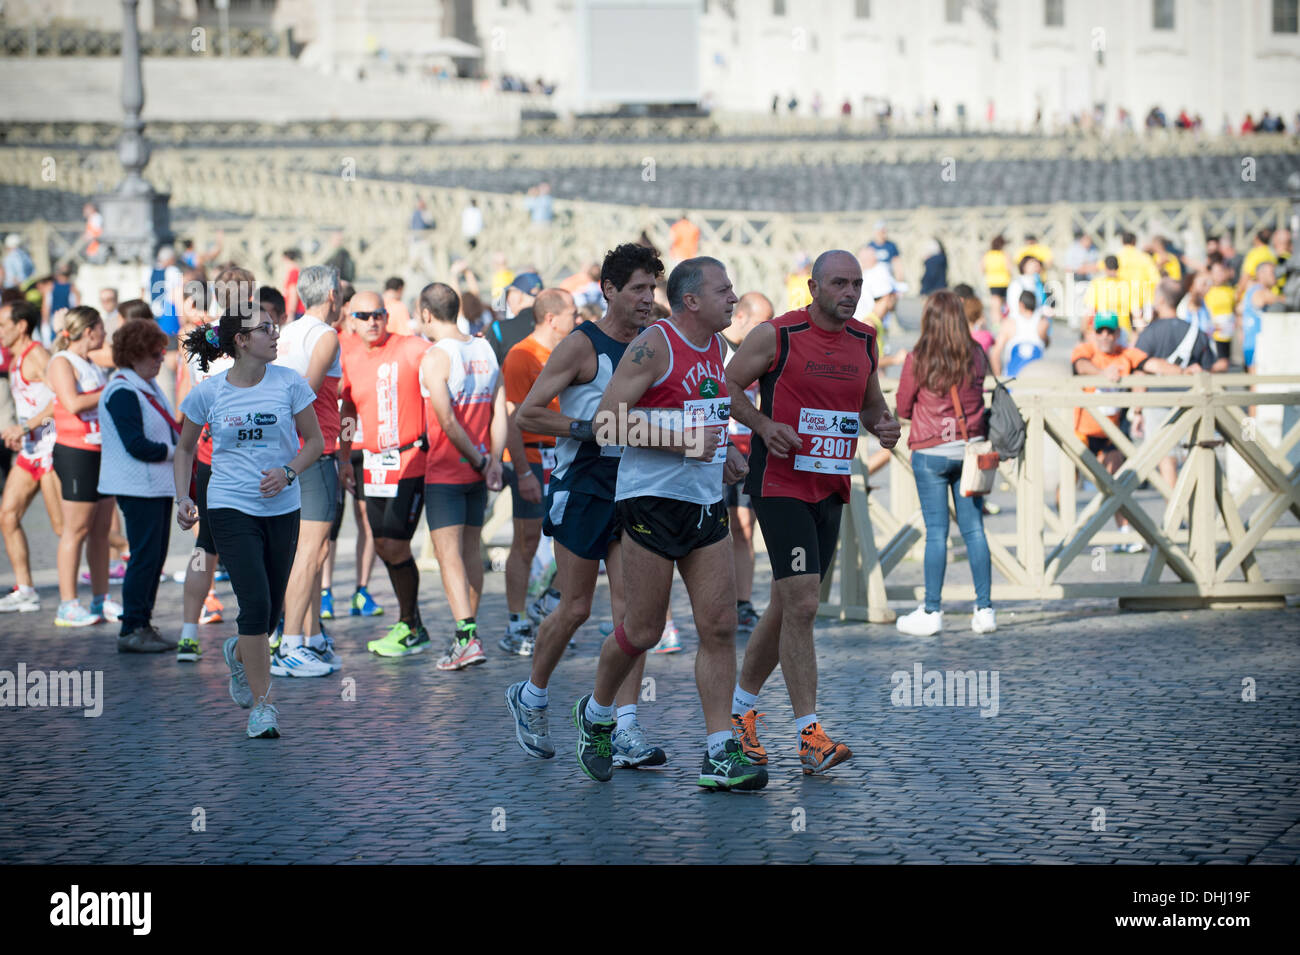 Race in Vatican city Stock Photo